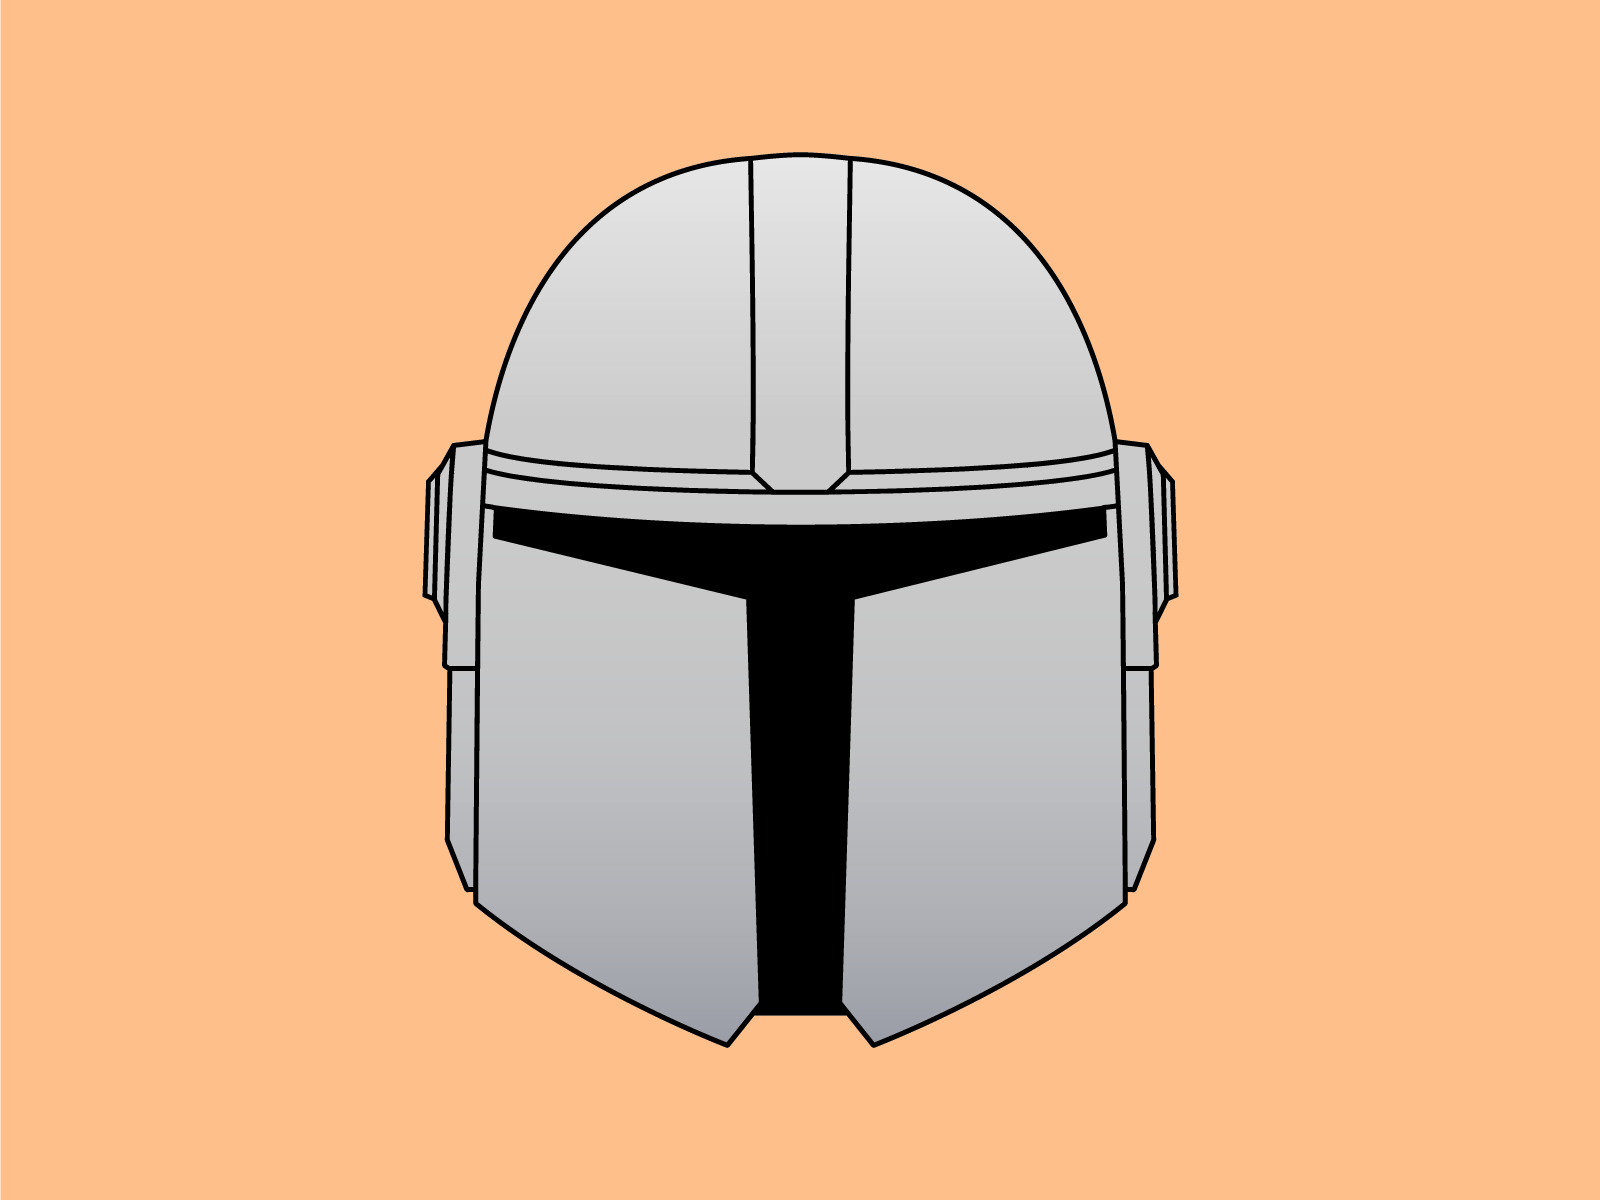 Mandalorian helmet by kara siegert on